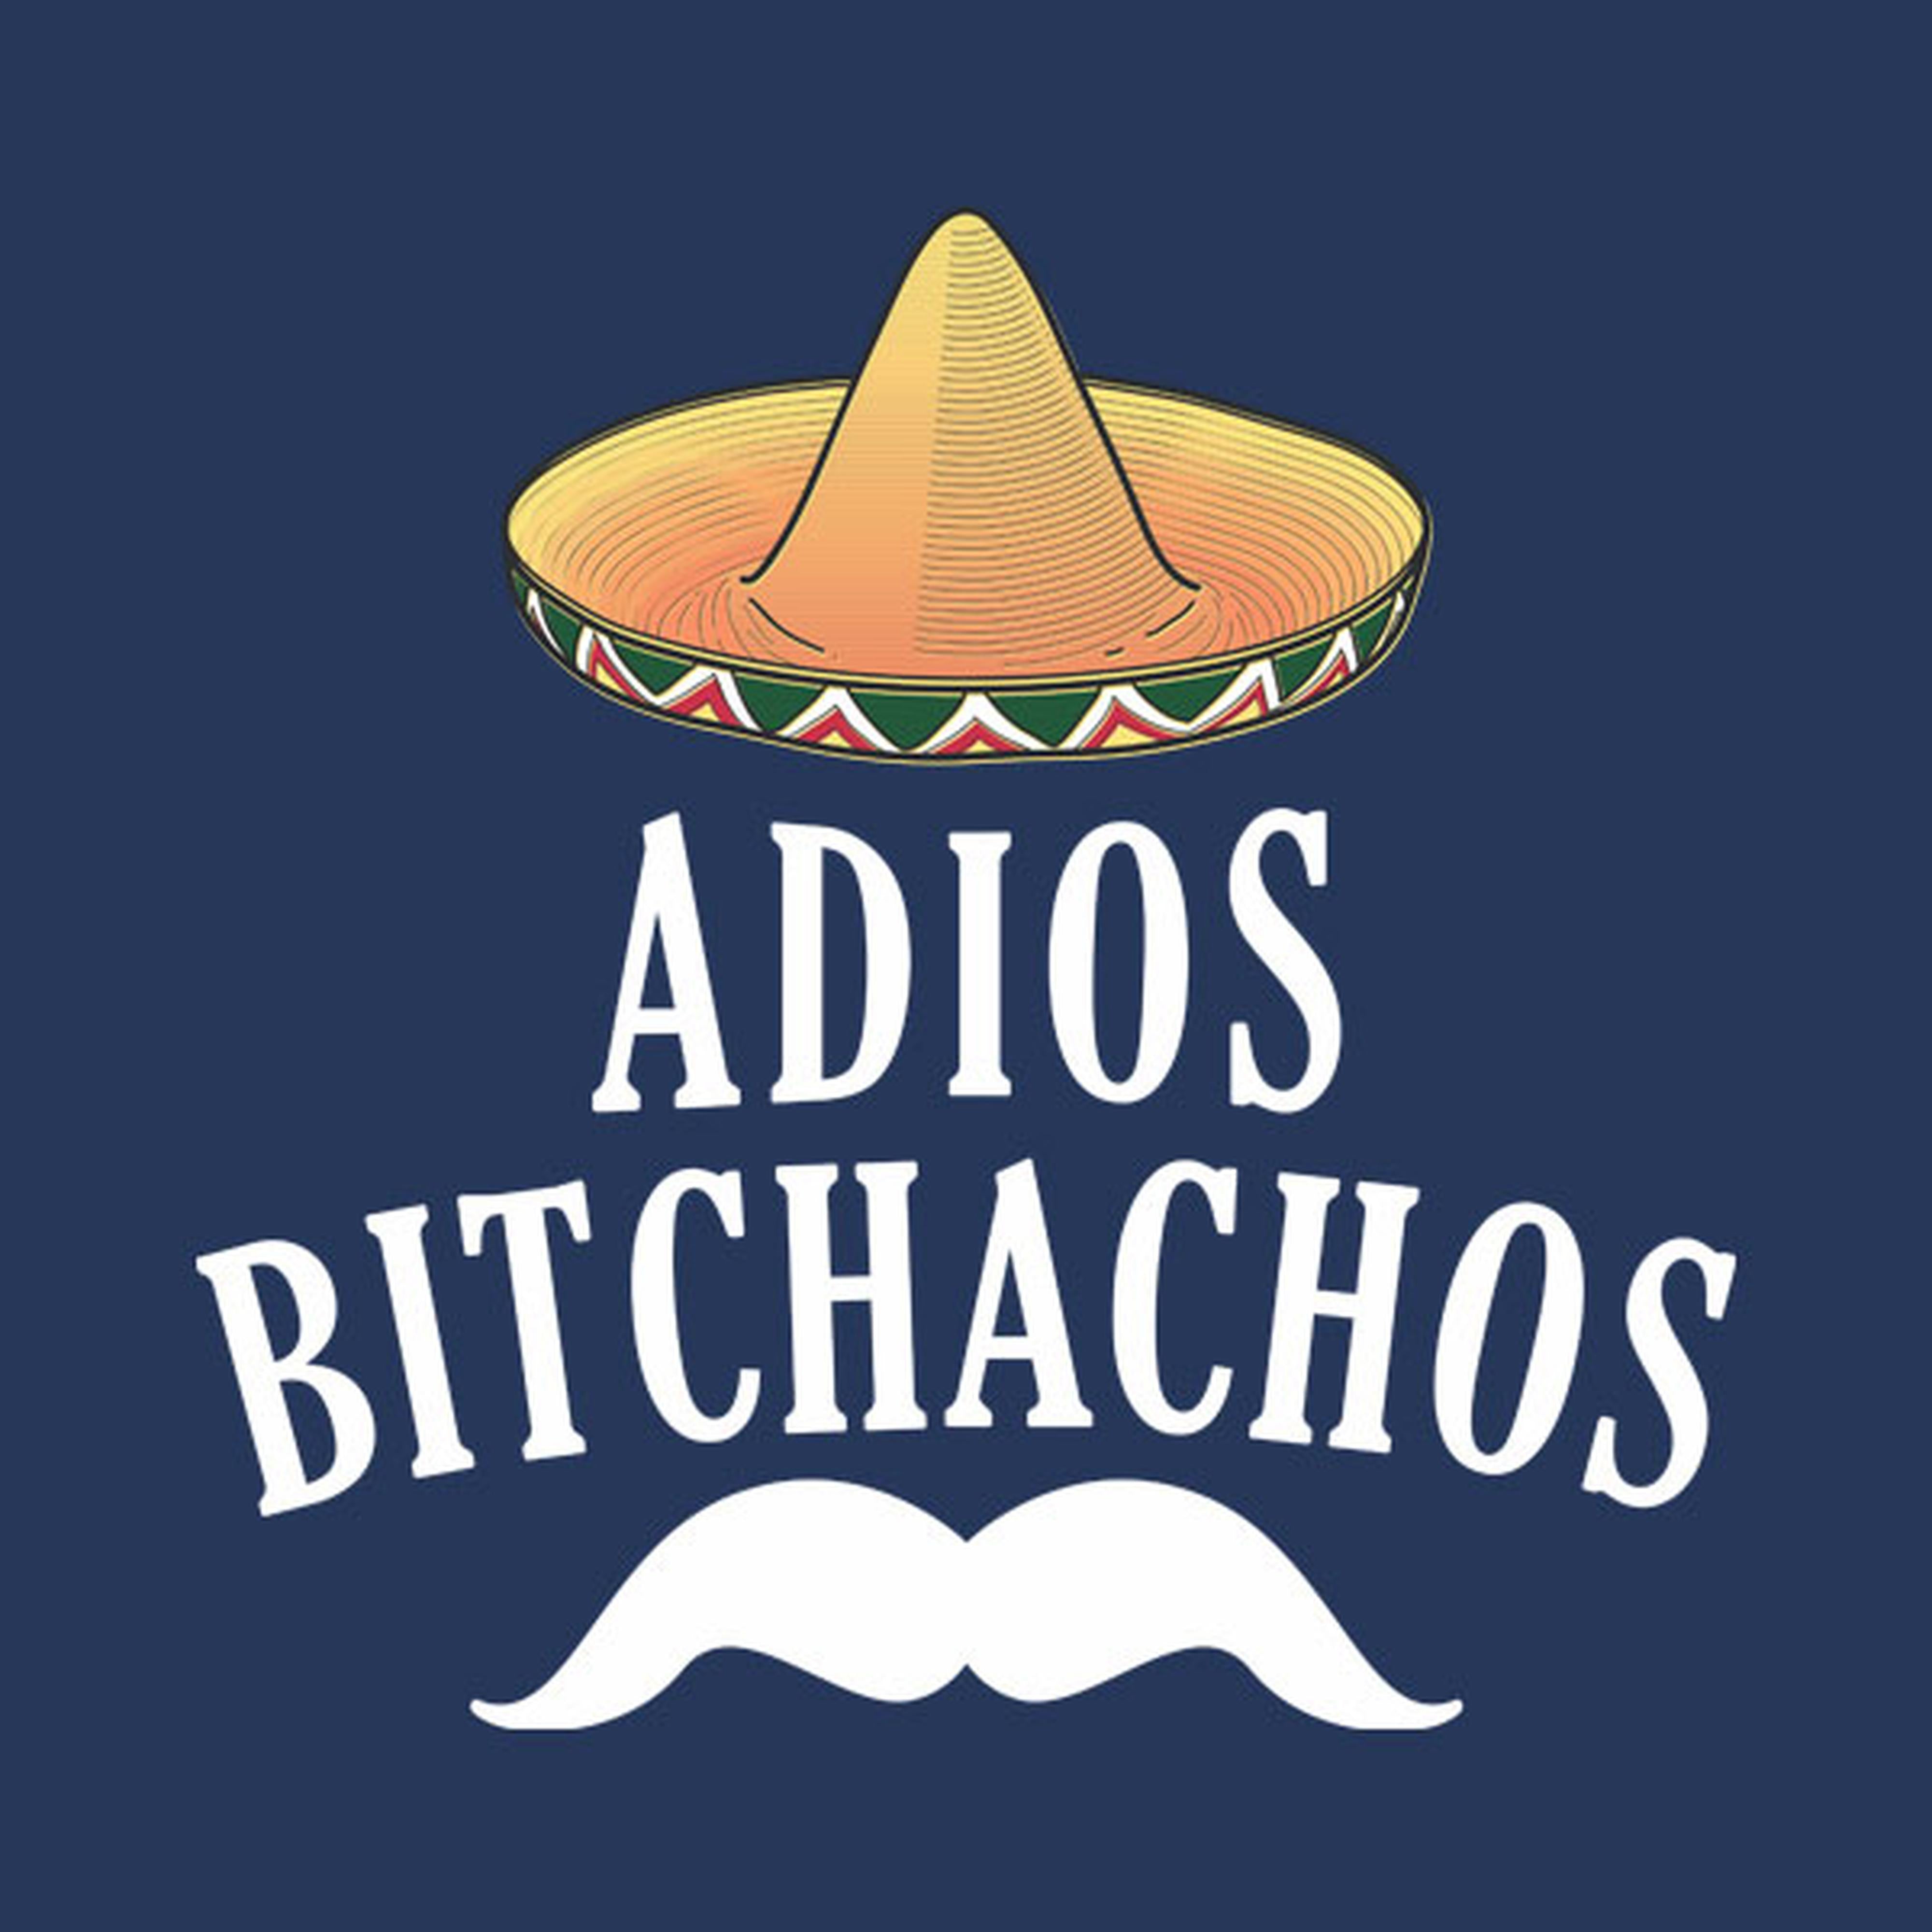 Adios bitchachos - T-shirt